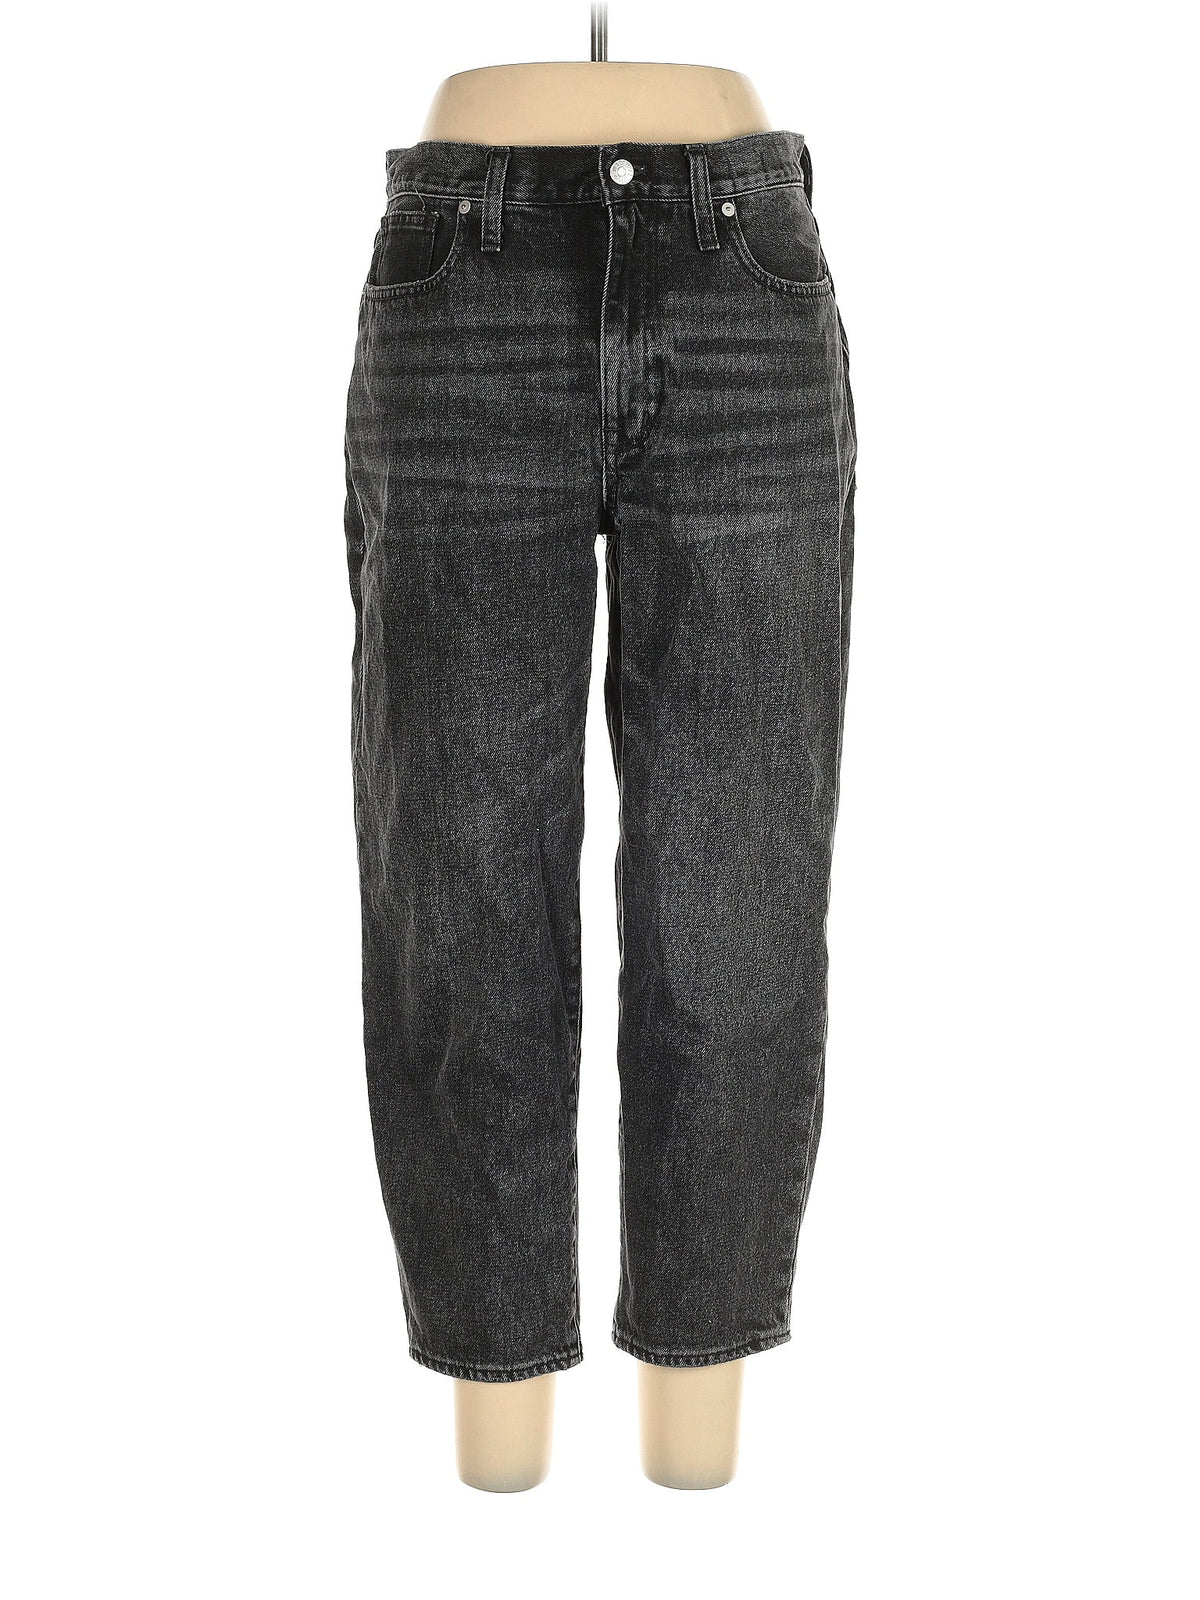 High-Rise Boyjeans Jeans in Dark Wash waist size - 30 P